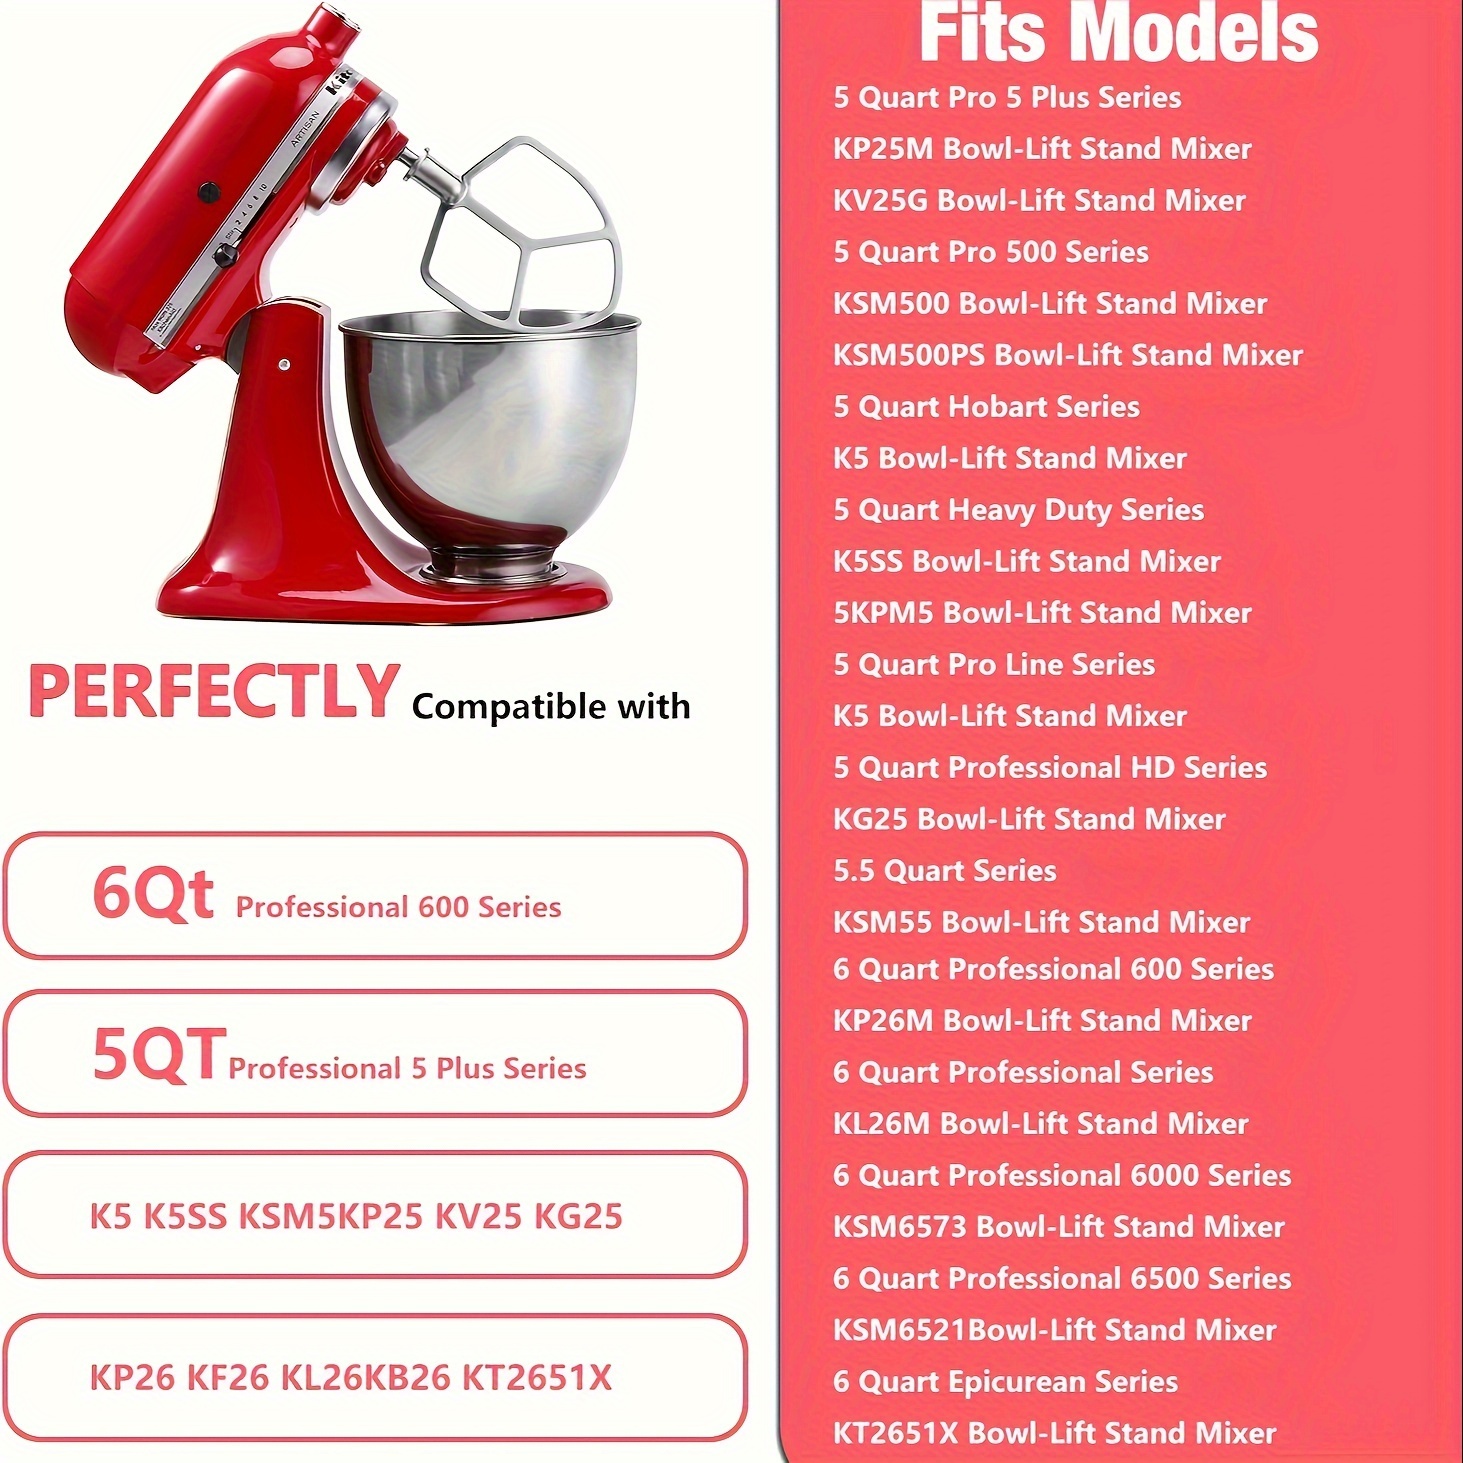 Kitchenaid Professional 5 Plus Series Bowl-Lift Stand Mixer